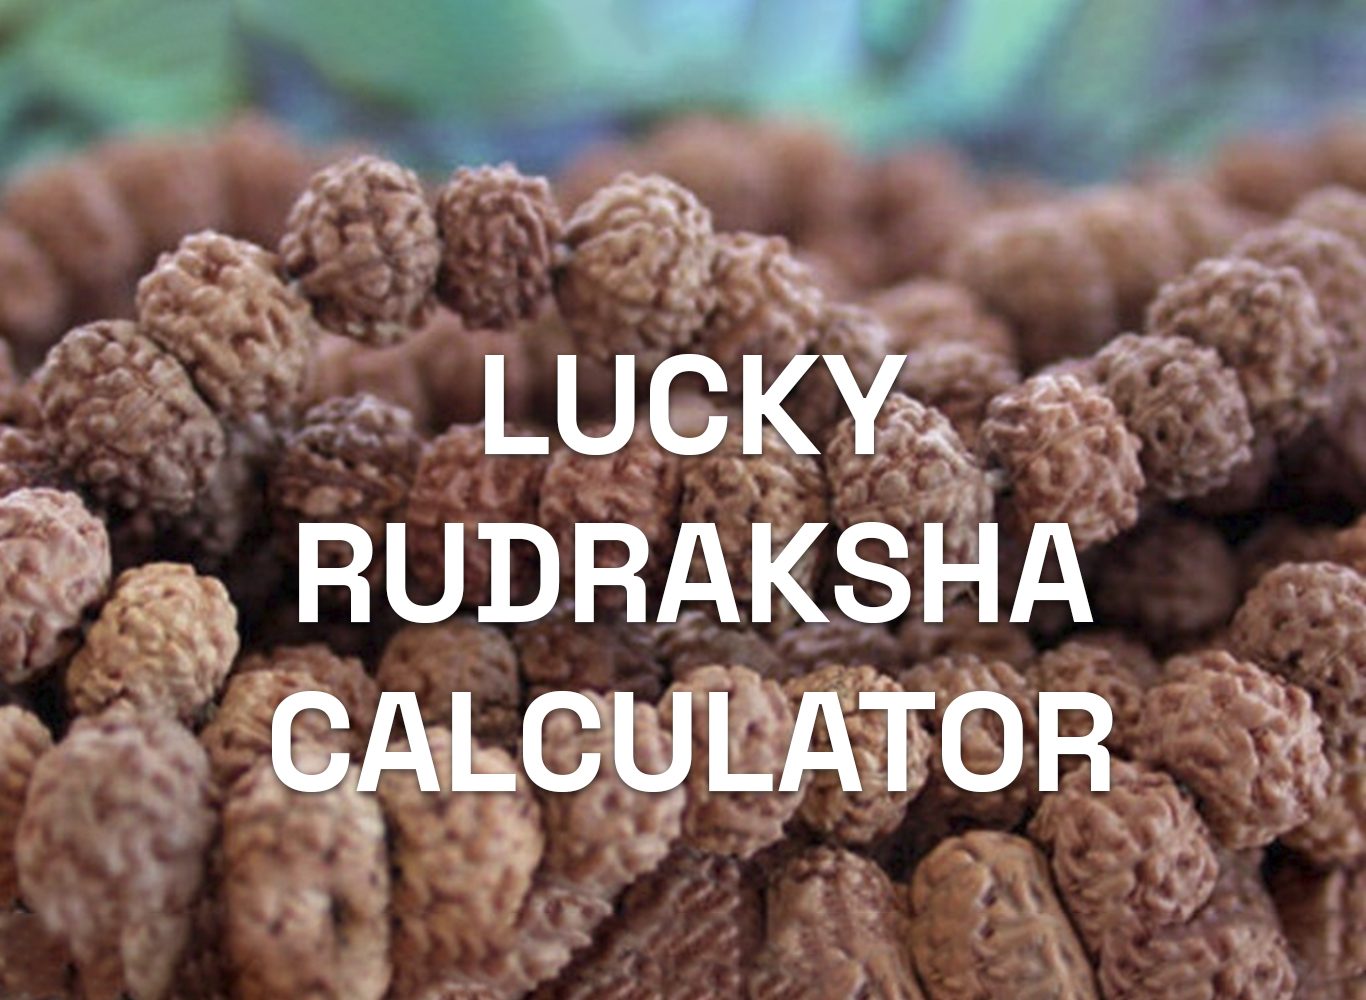 Lucky Rudraksha Calculator